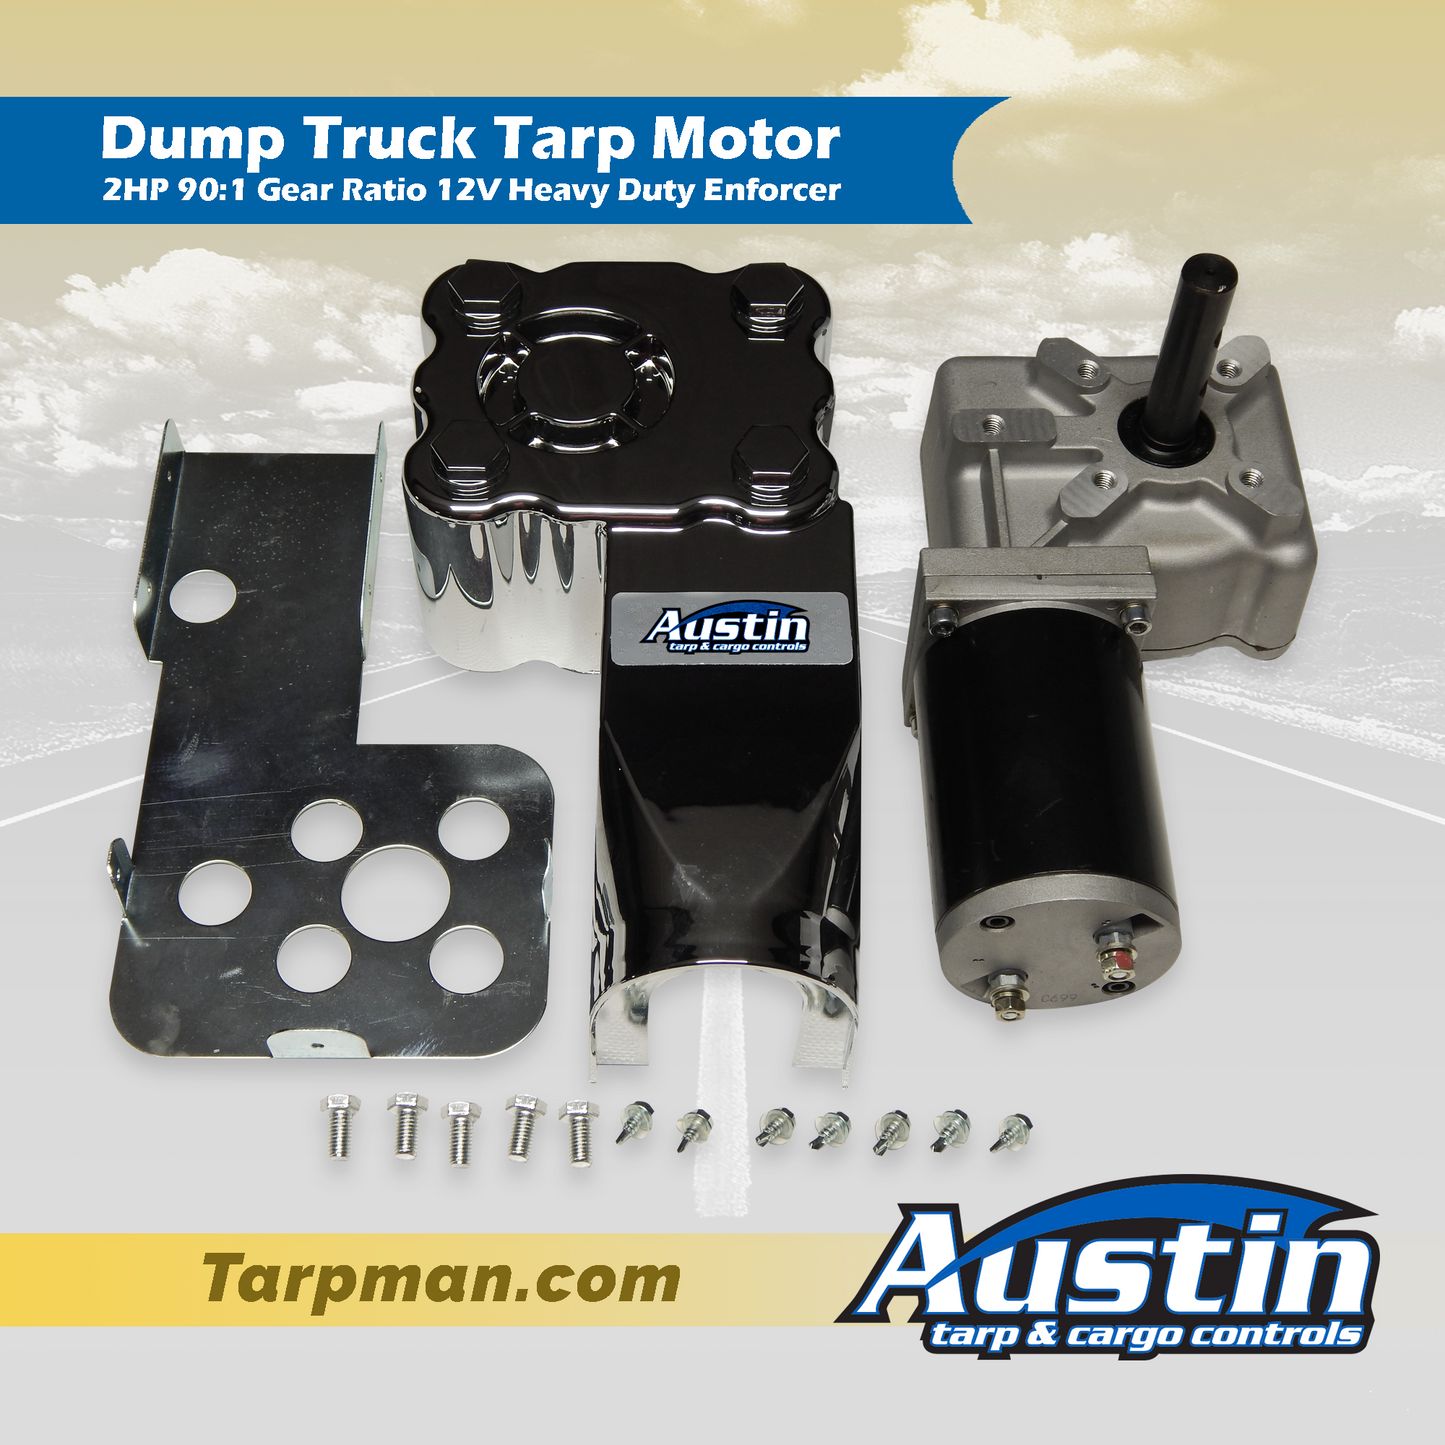 2HP 90:1 Gear Ratio 12V Heavy Duty Enforcer Dump Truck Tarp Motor Tarpman.com | Austin Tarp & Cargo Controls